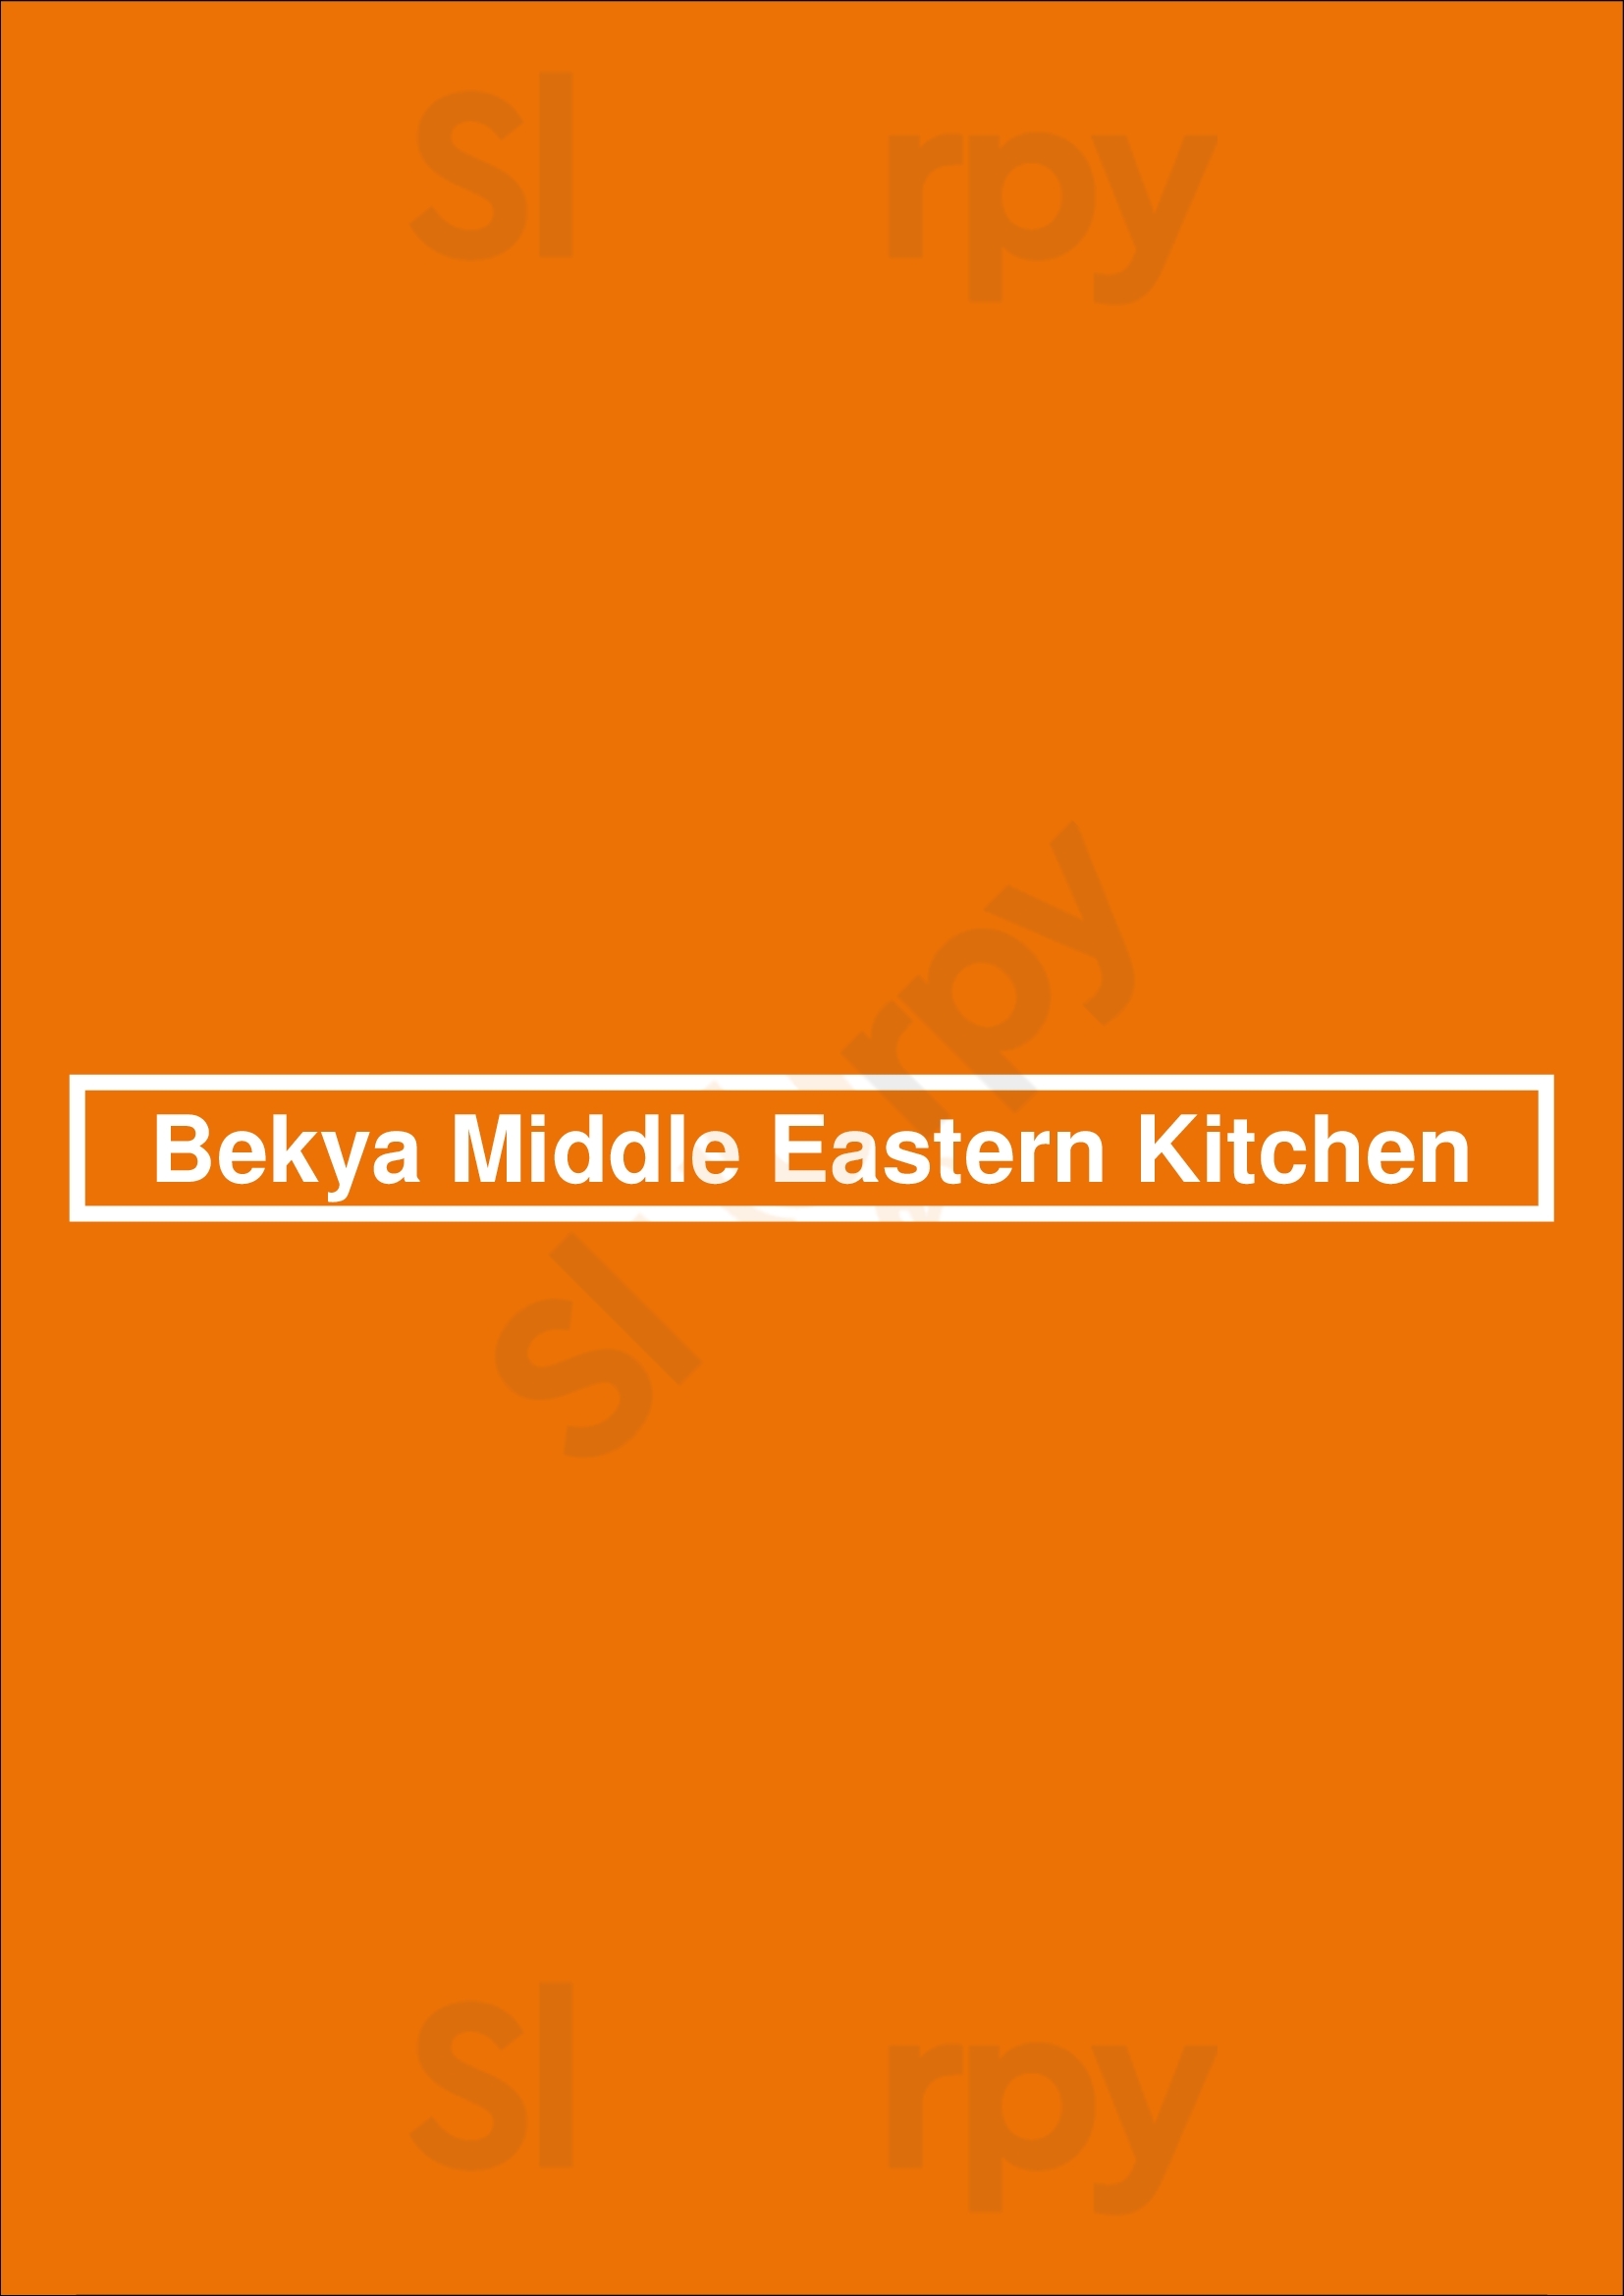 Bekya Middle Eastern Kitchen Sydney Menu - 1